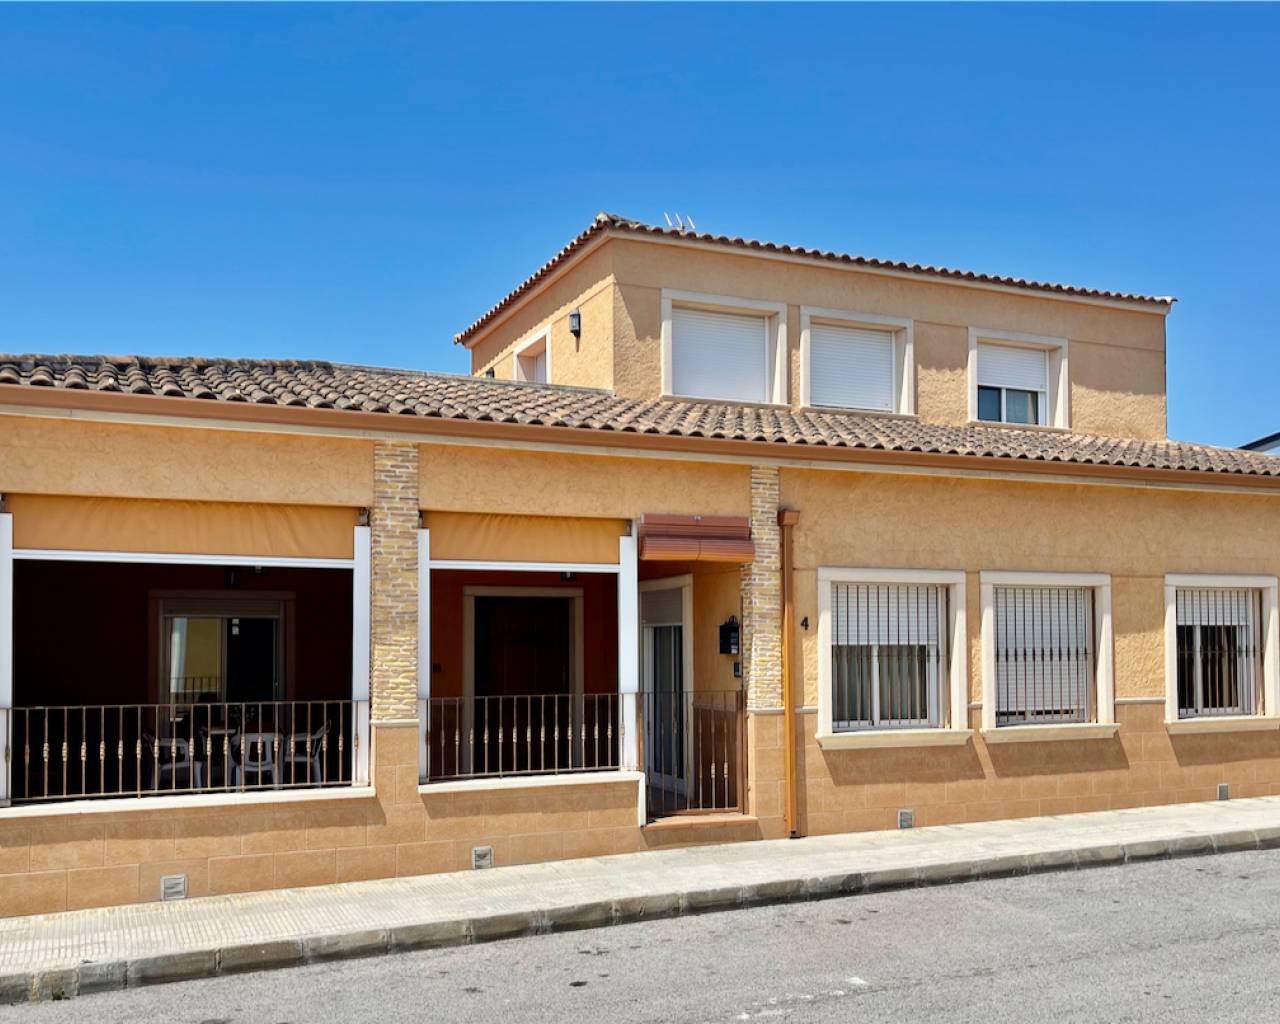 For sale: 5 bedroom house / villa in Catral, Costa Blanca